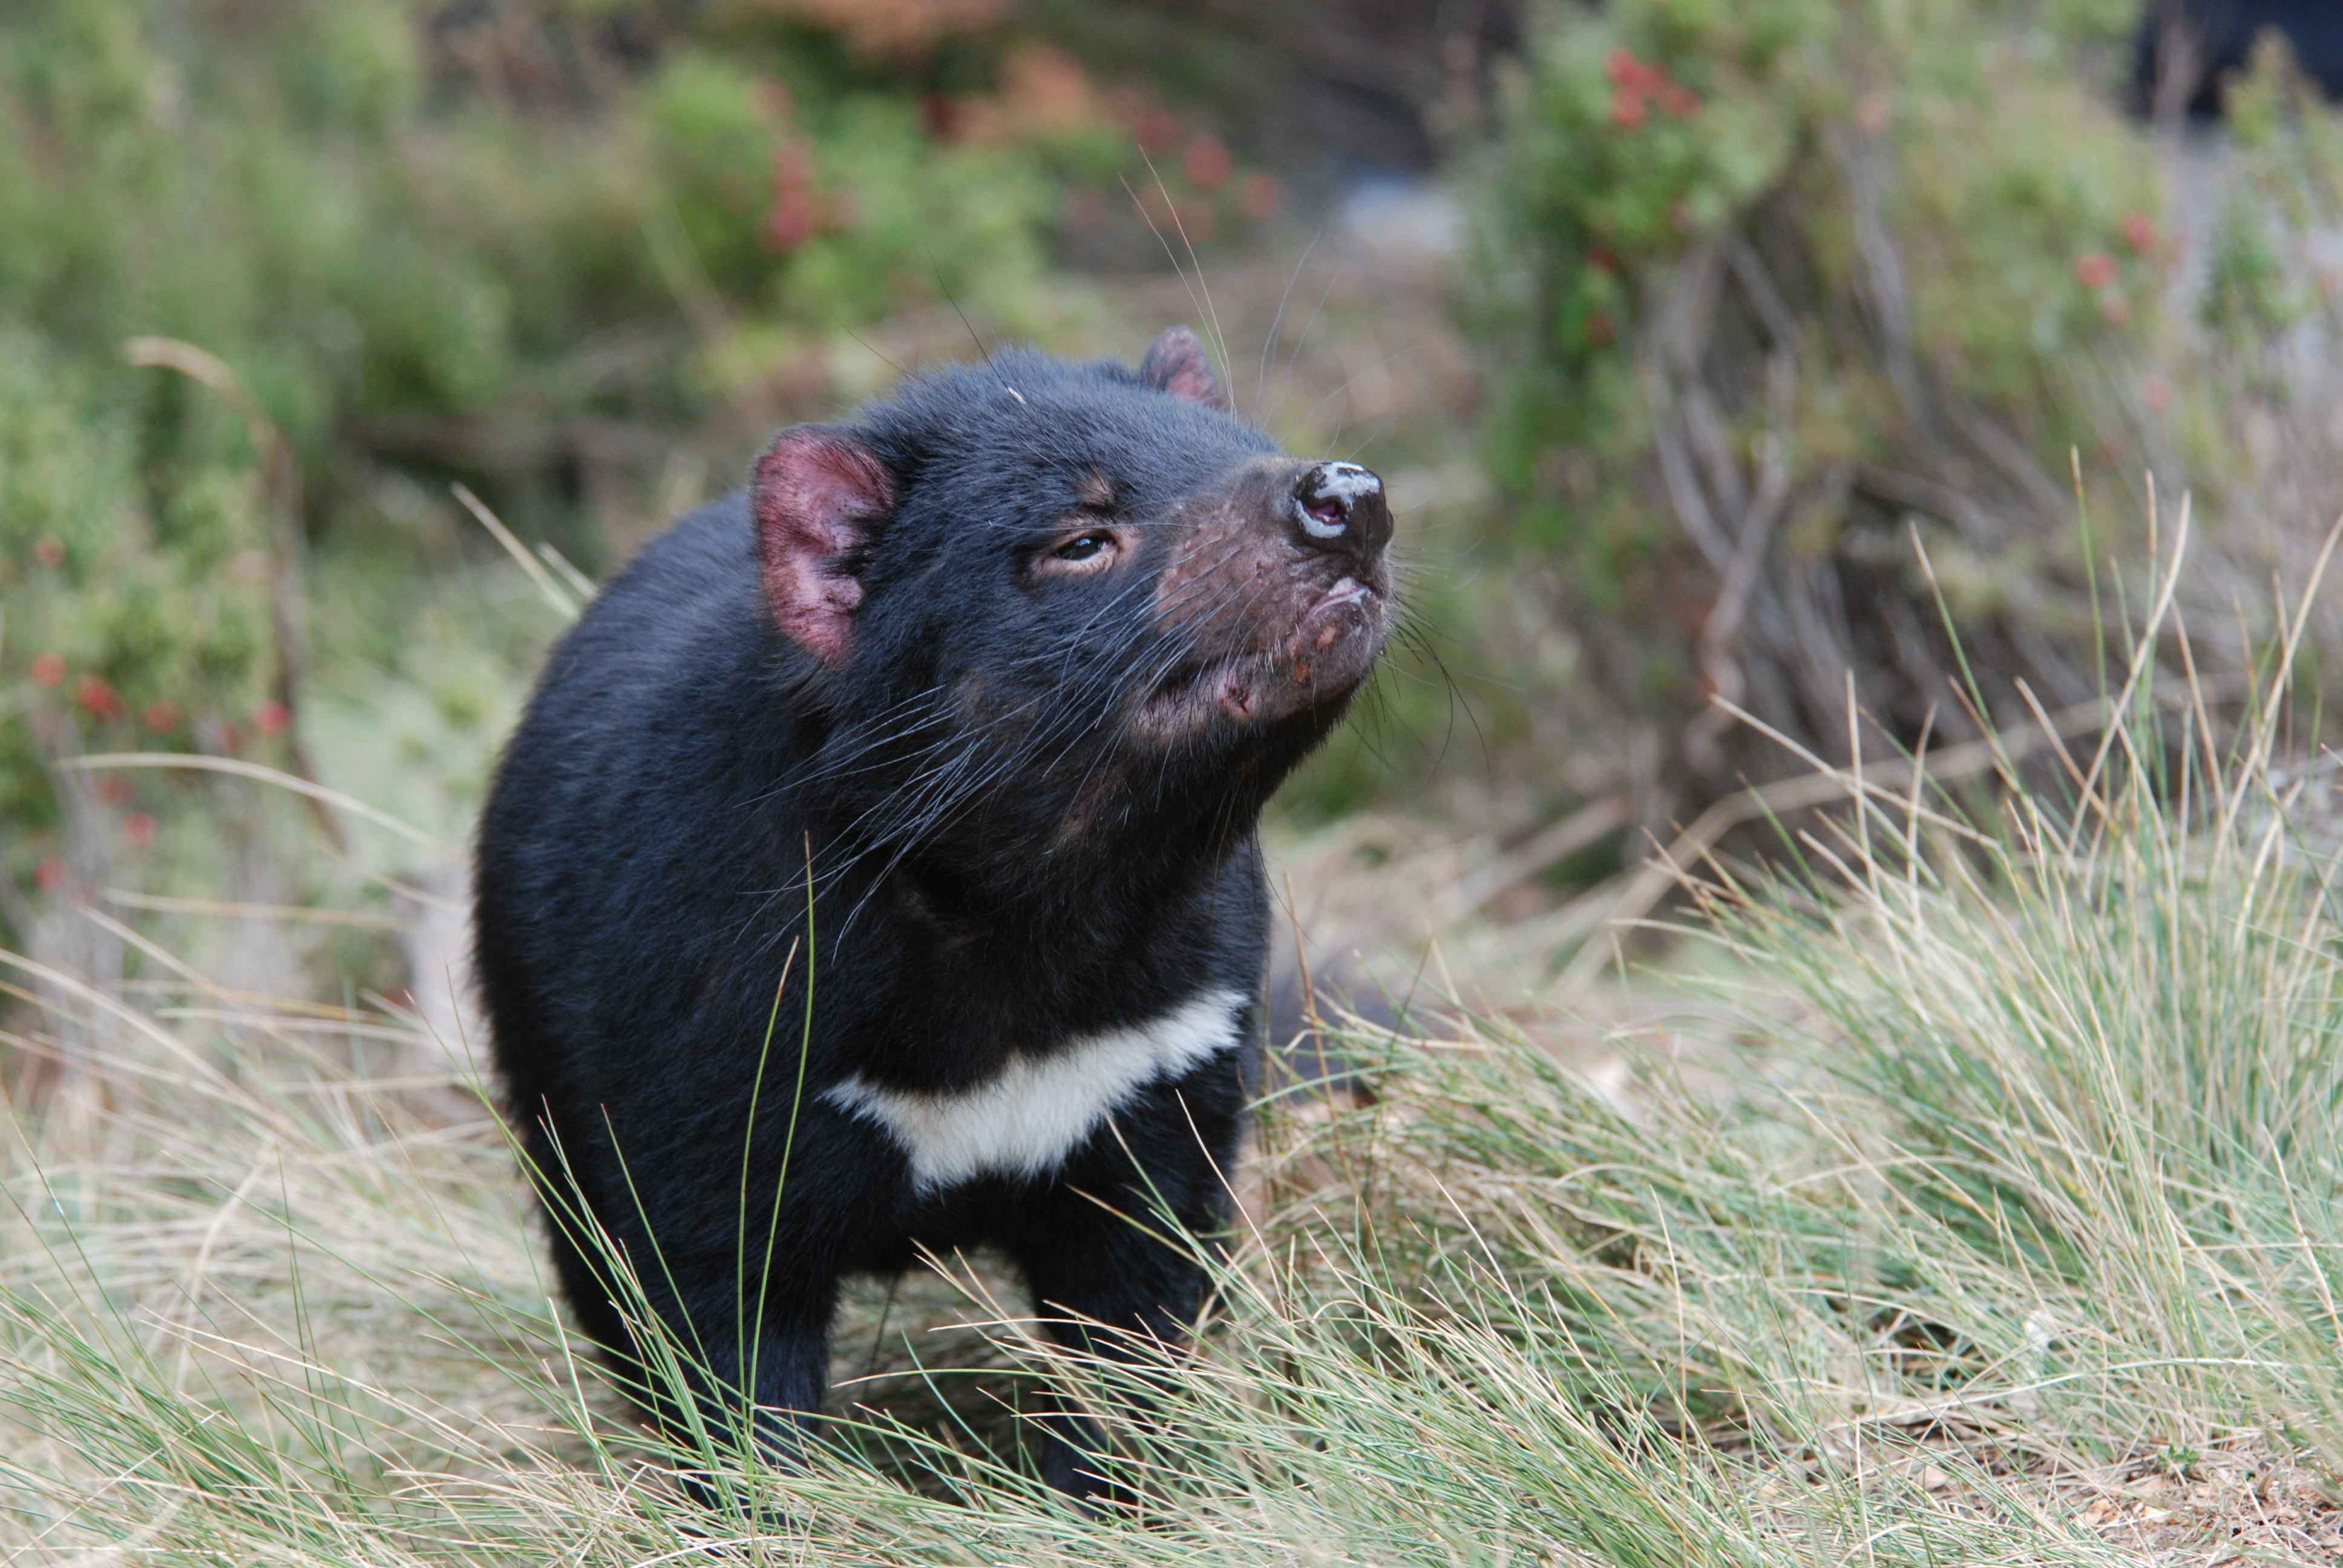 Tasmanian devils: fierce predators with the strongest bite per